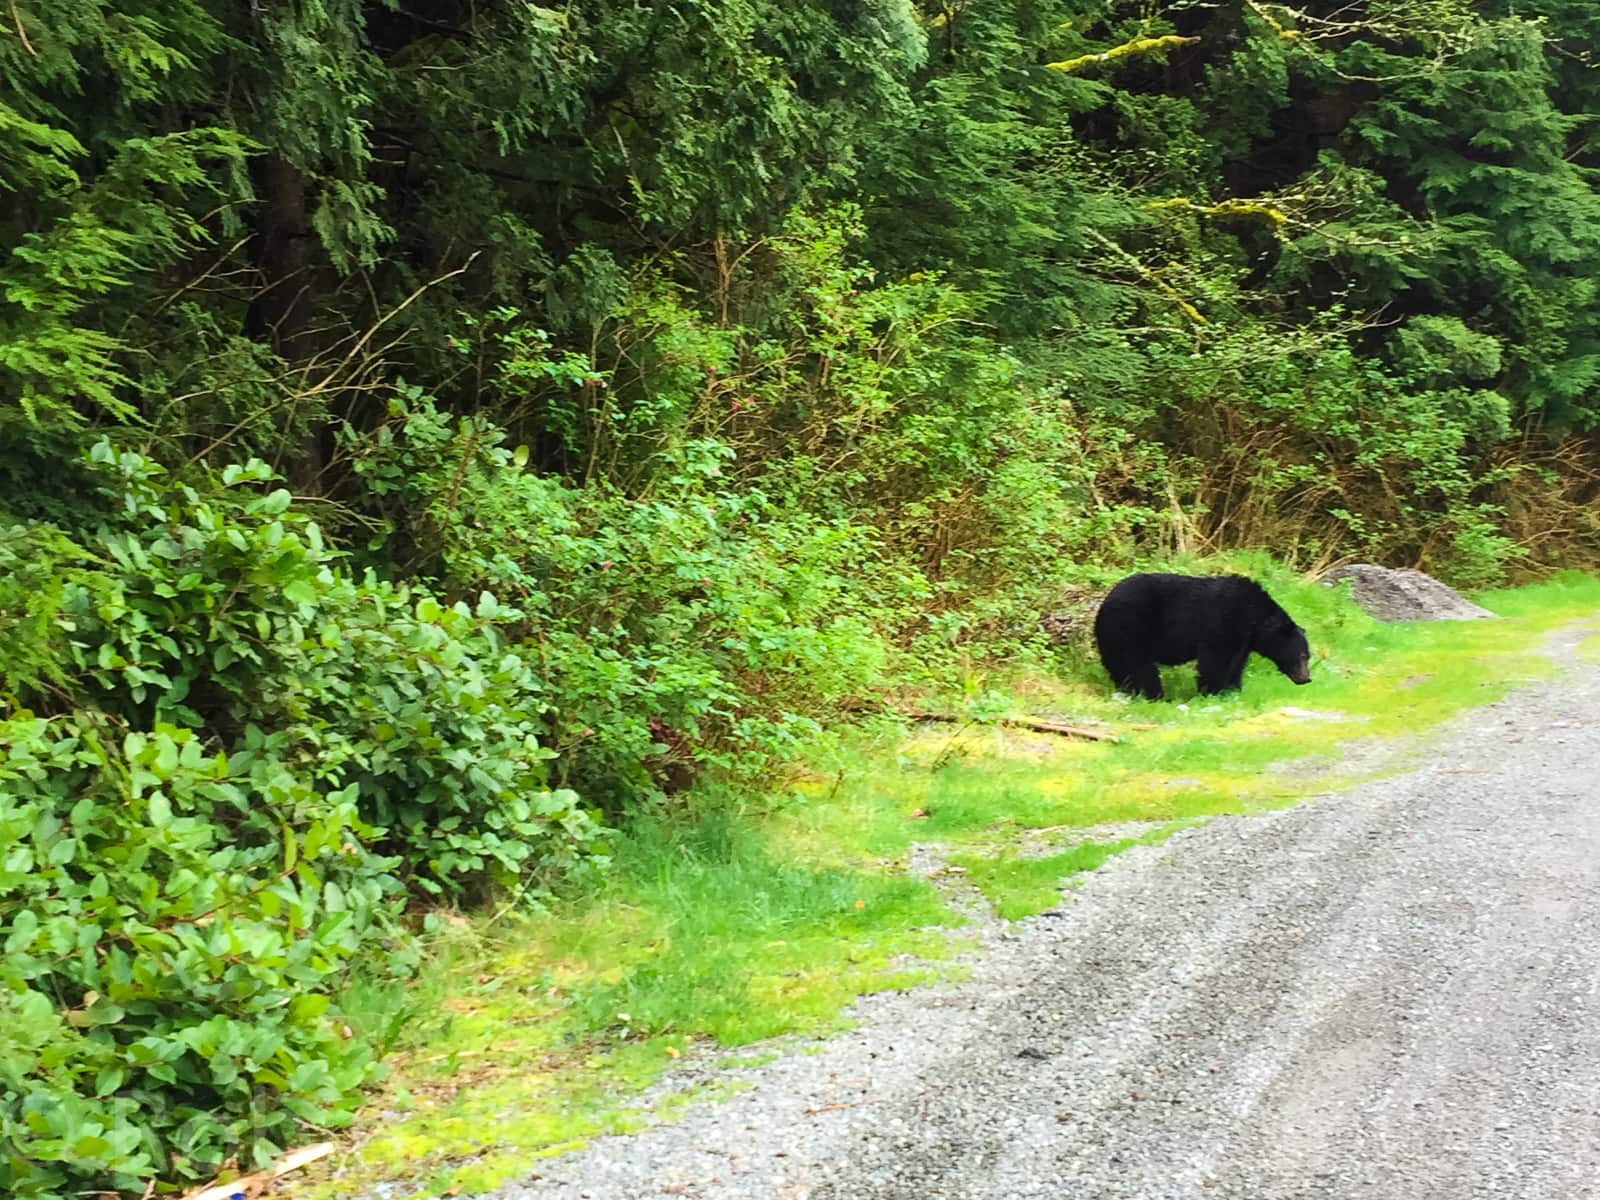 Black bear on side of road leaving Tofino